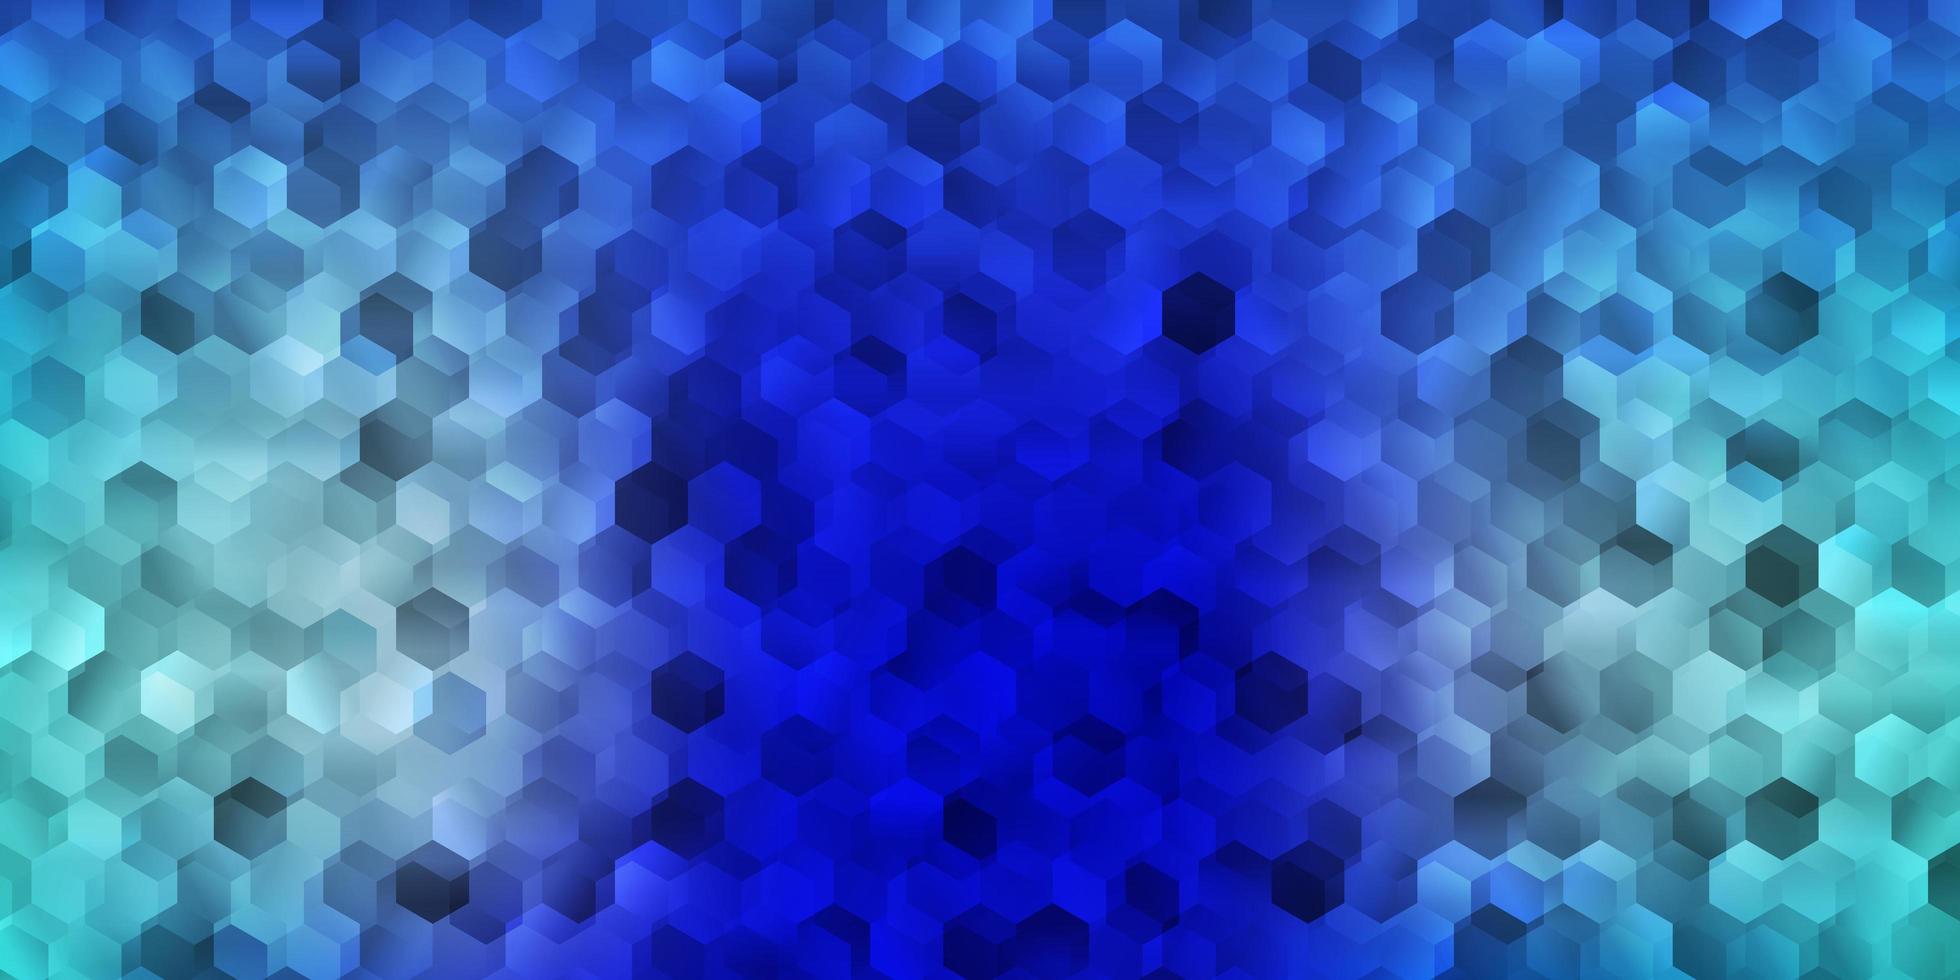 pano de fundo vector azul claro com formas caóticas.